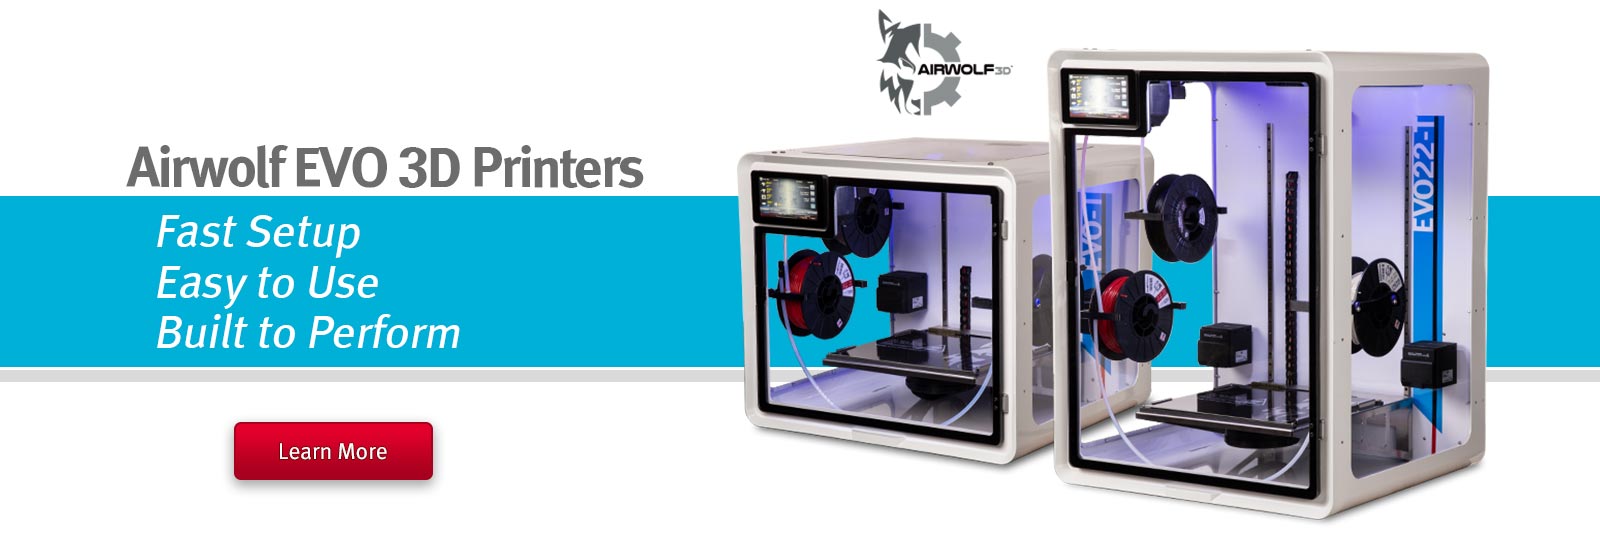 Airwolf EVO 3D Printers